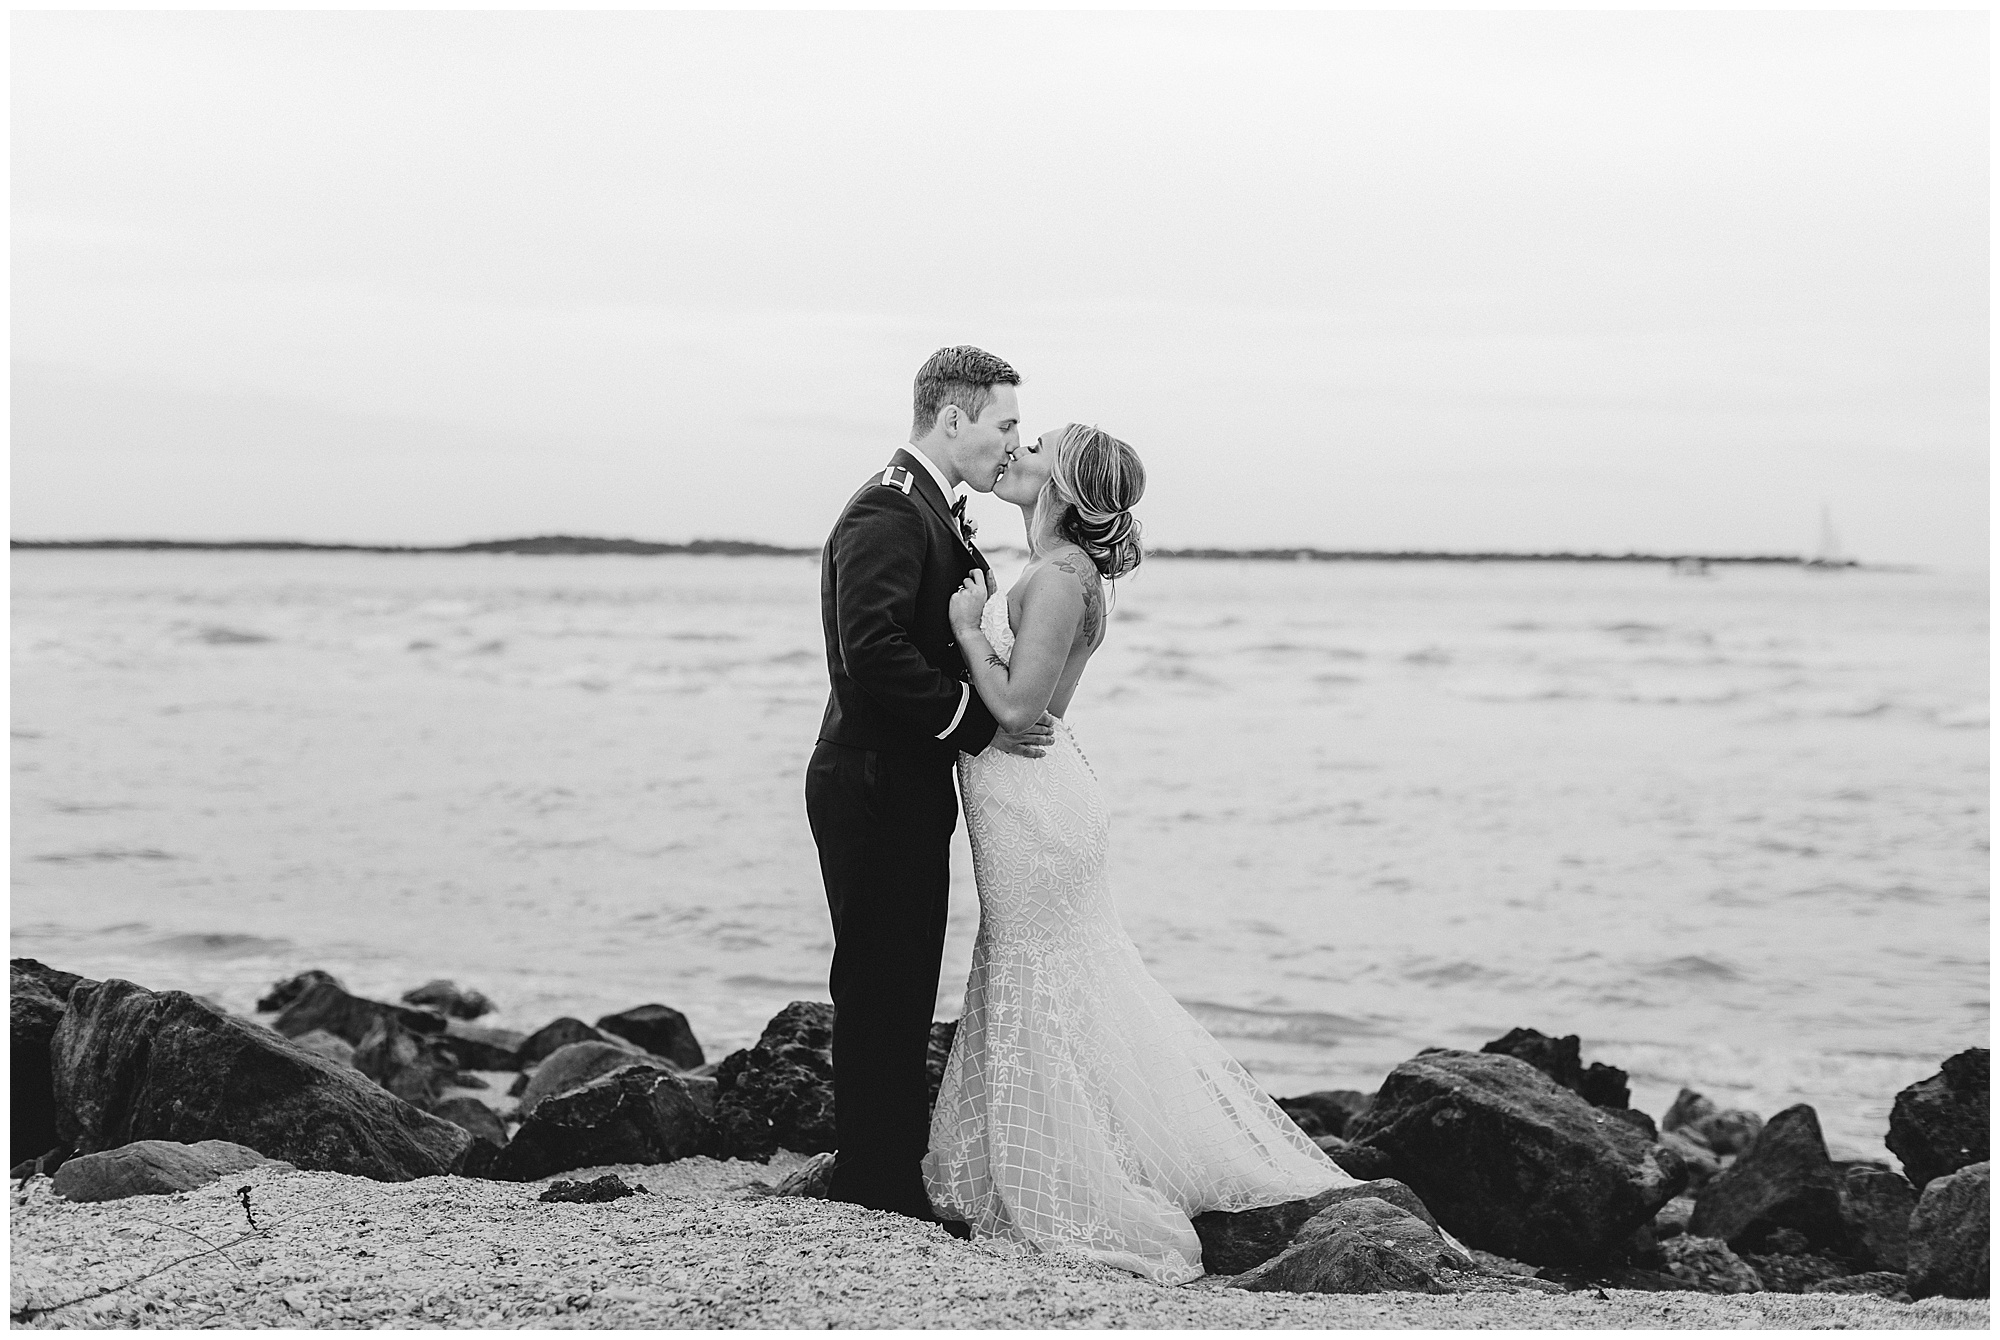 Jace & Anton, Pass-A-Grille Beach, St. Petersburg Florida wedding, Kelley Stinson Photography, beach wedding, beach bride and groom